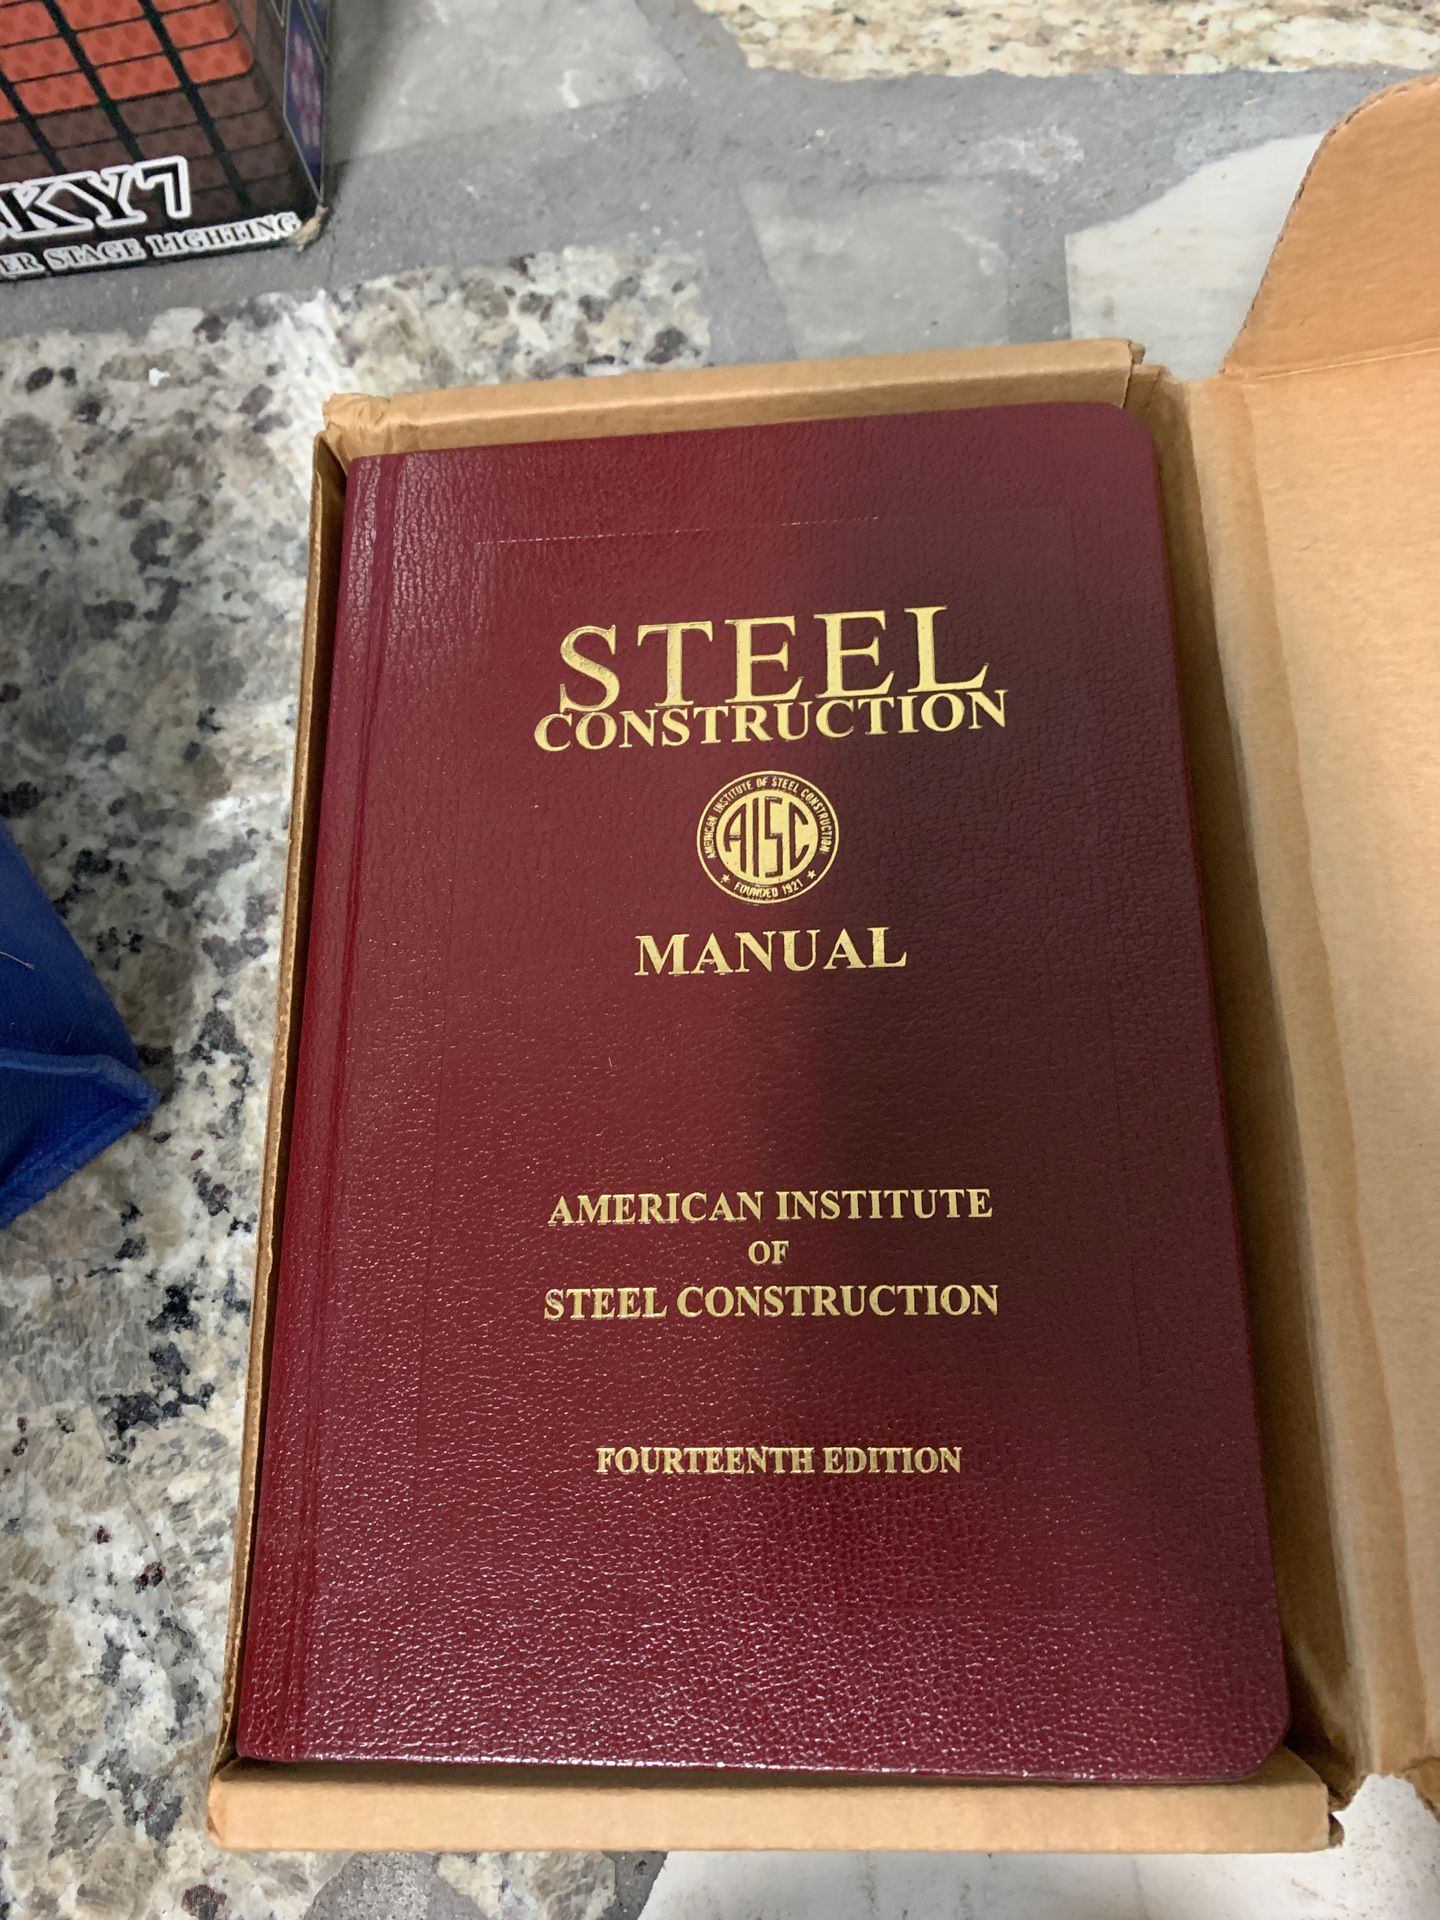 Steel construction Manual book